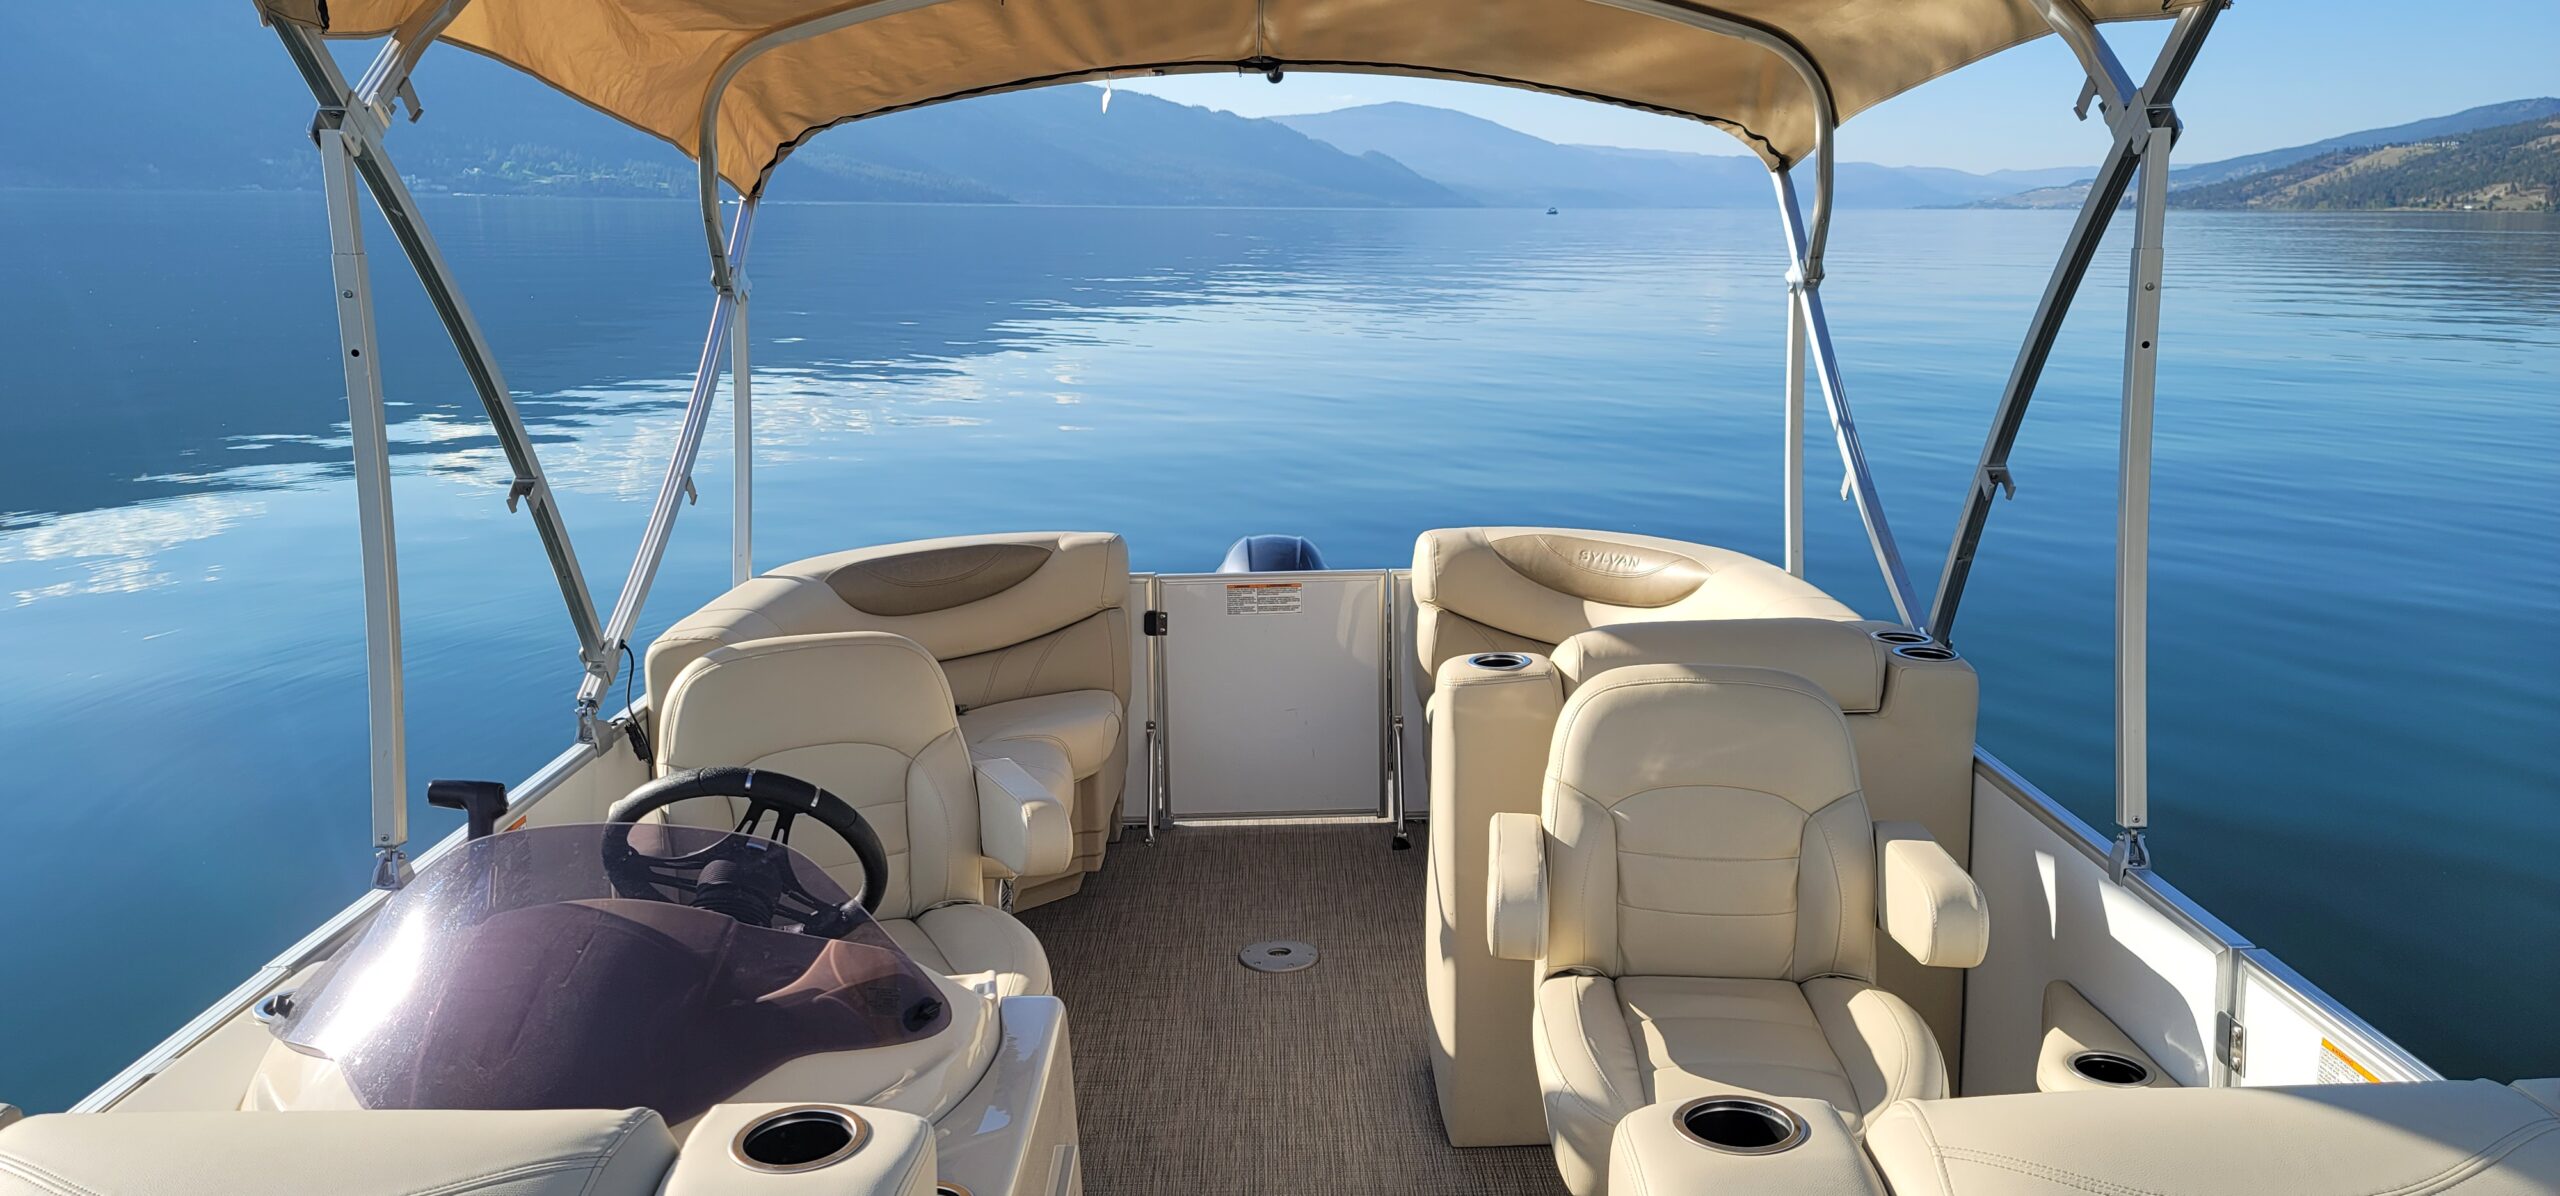 Luxury pontoon boat for tours on Okanagan Lake